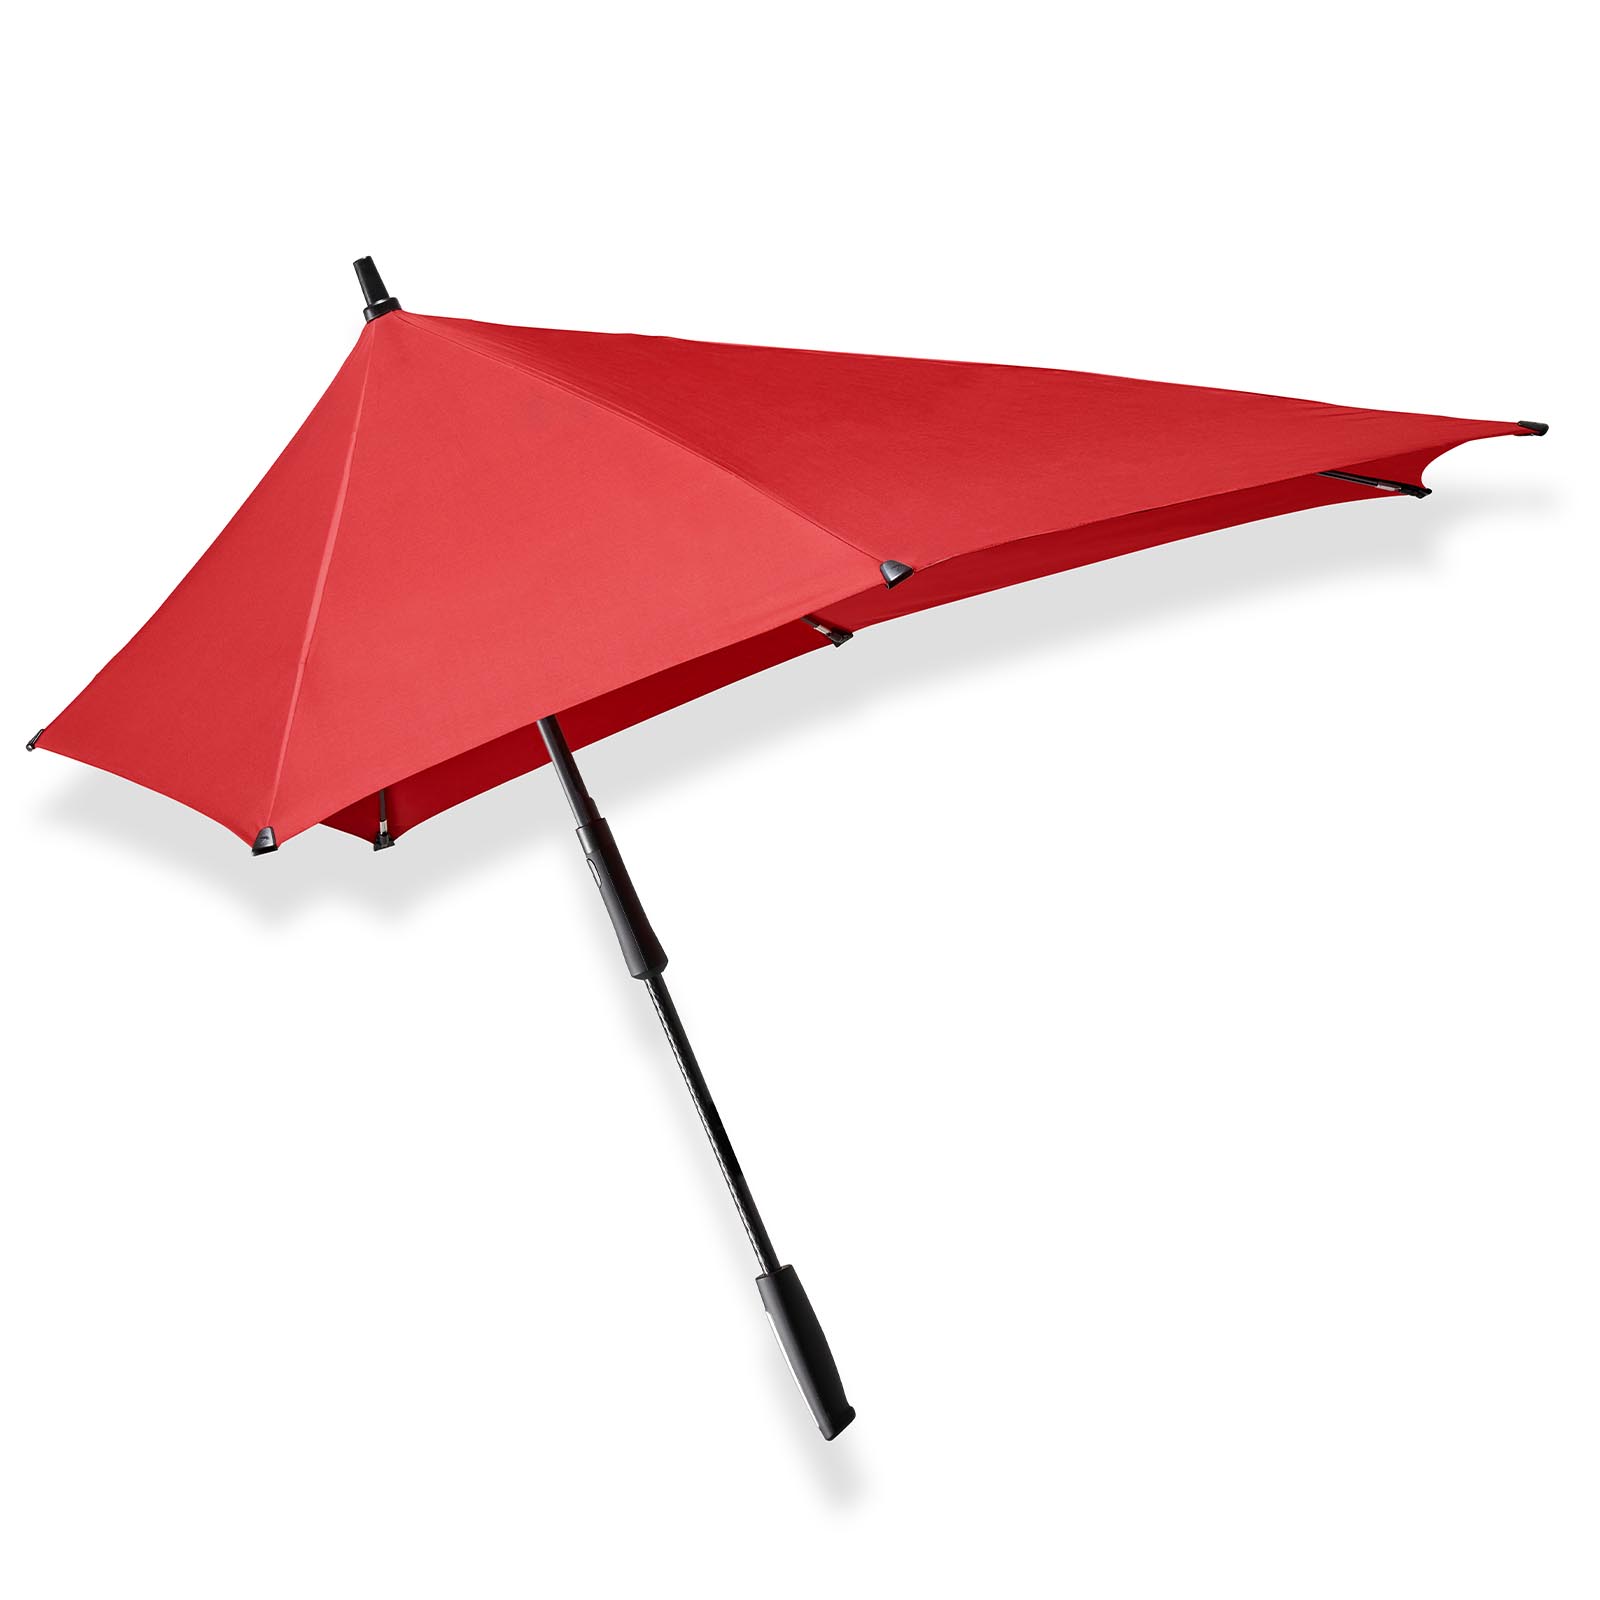 Manual Automatic & Smart New Senz Umbrellas Original in various colors and